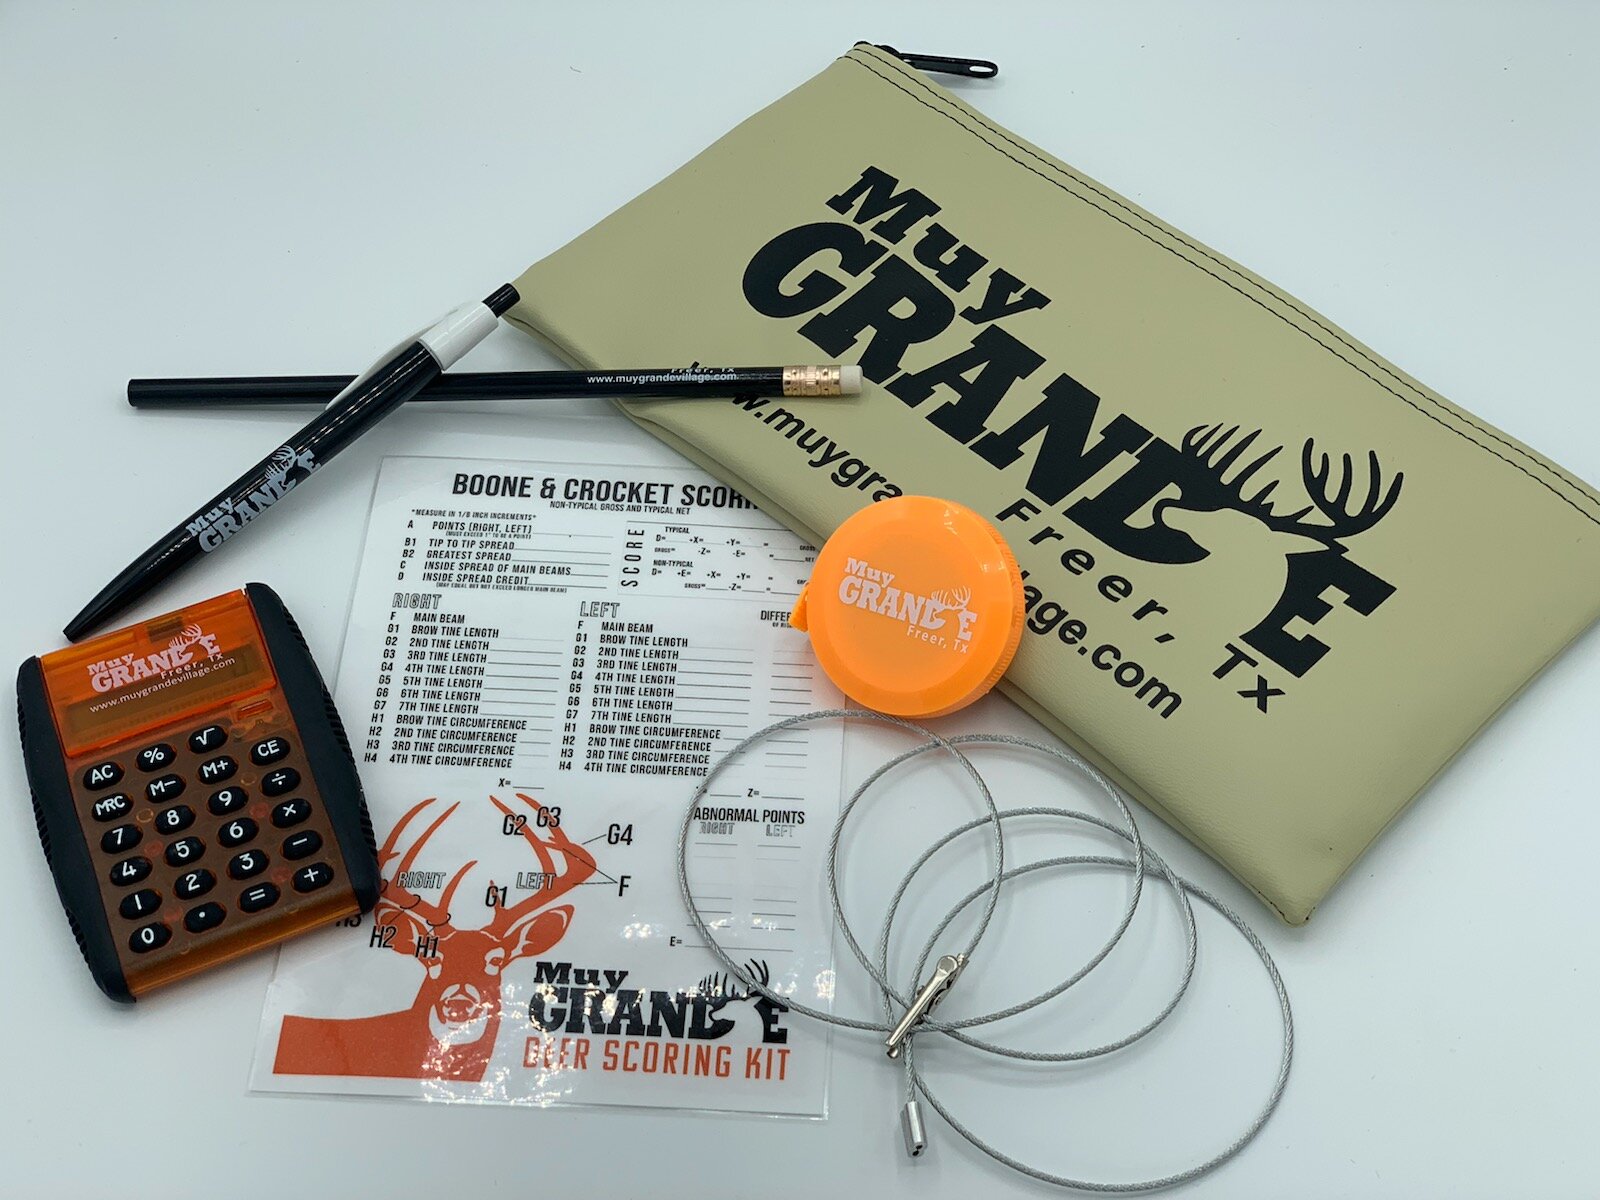 Muy Grande Scoring Kit — Muy Grande